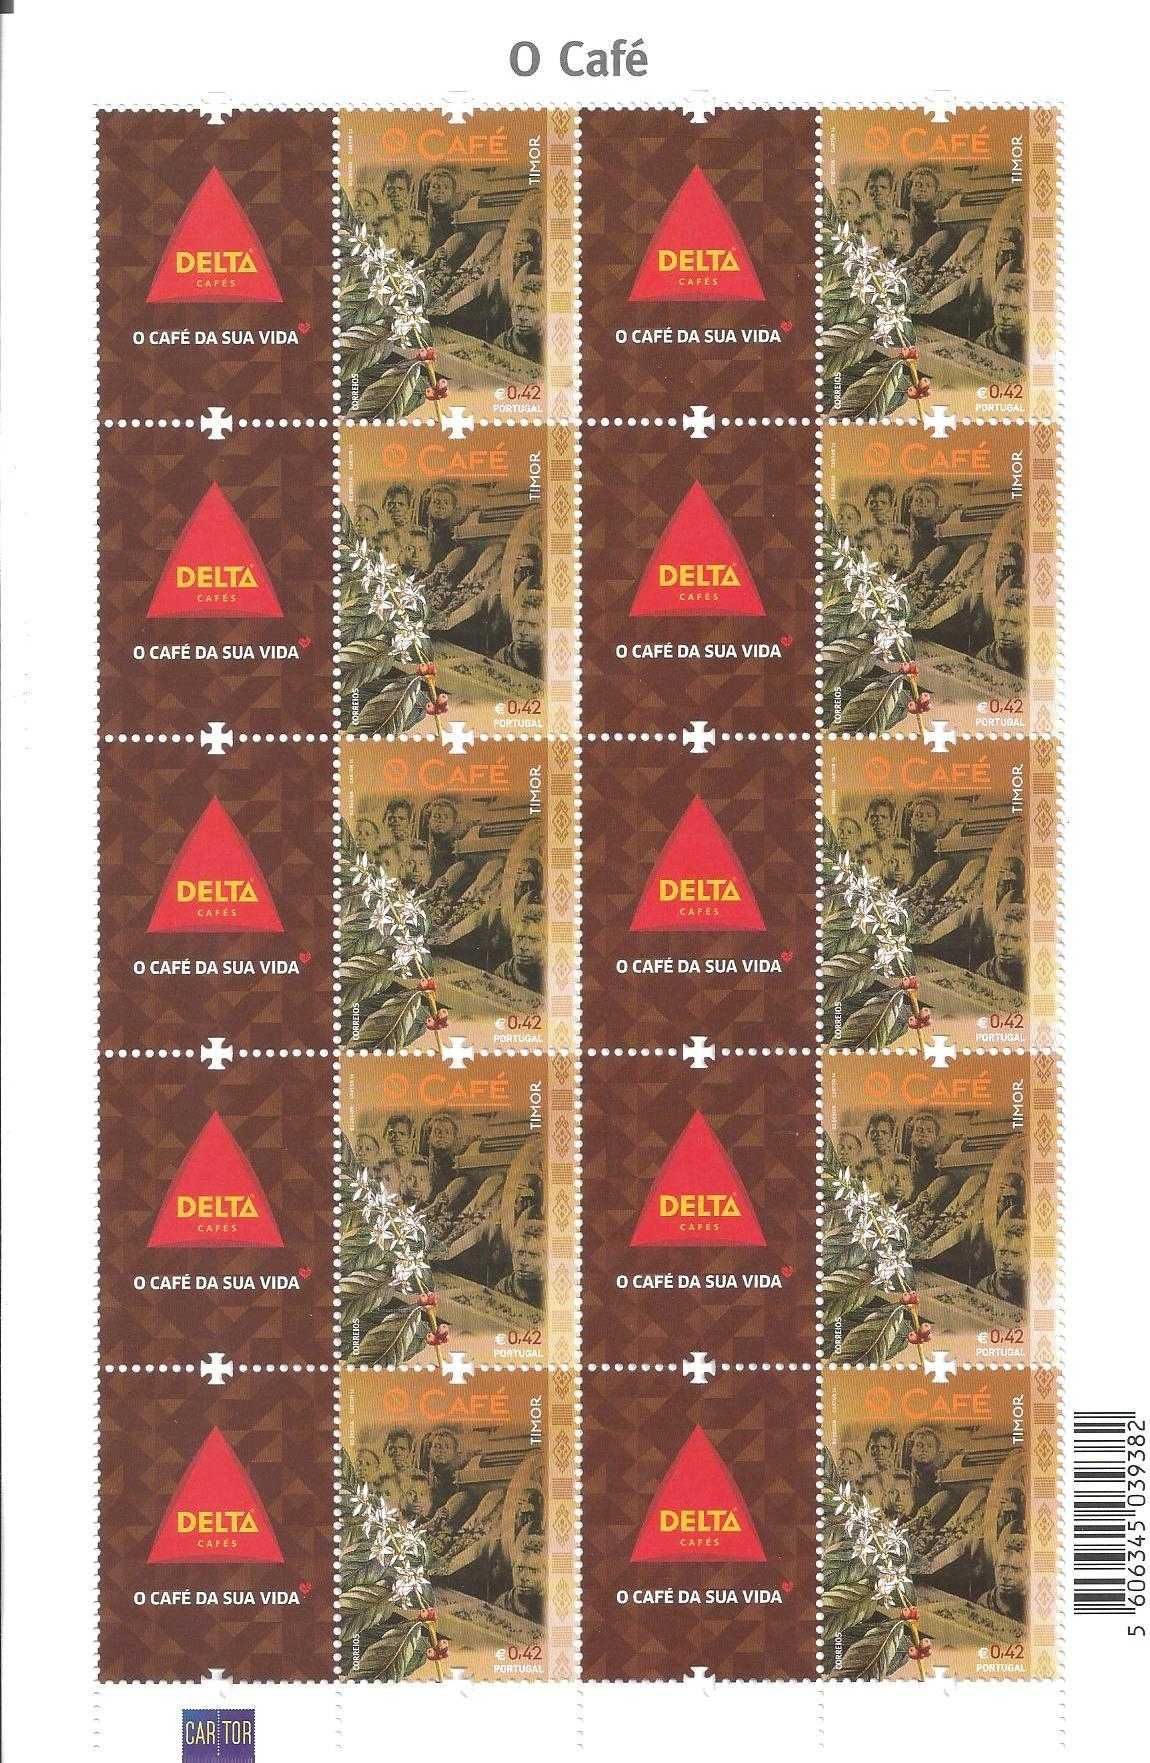 Folha miniatura selos CTT - ano 1979 a 2020 - novas